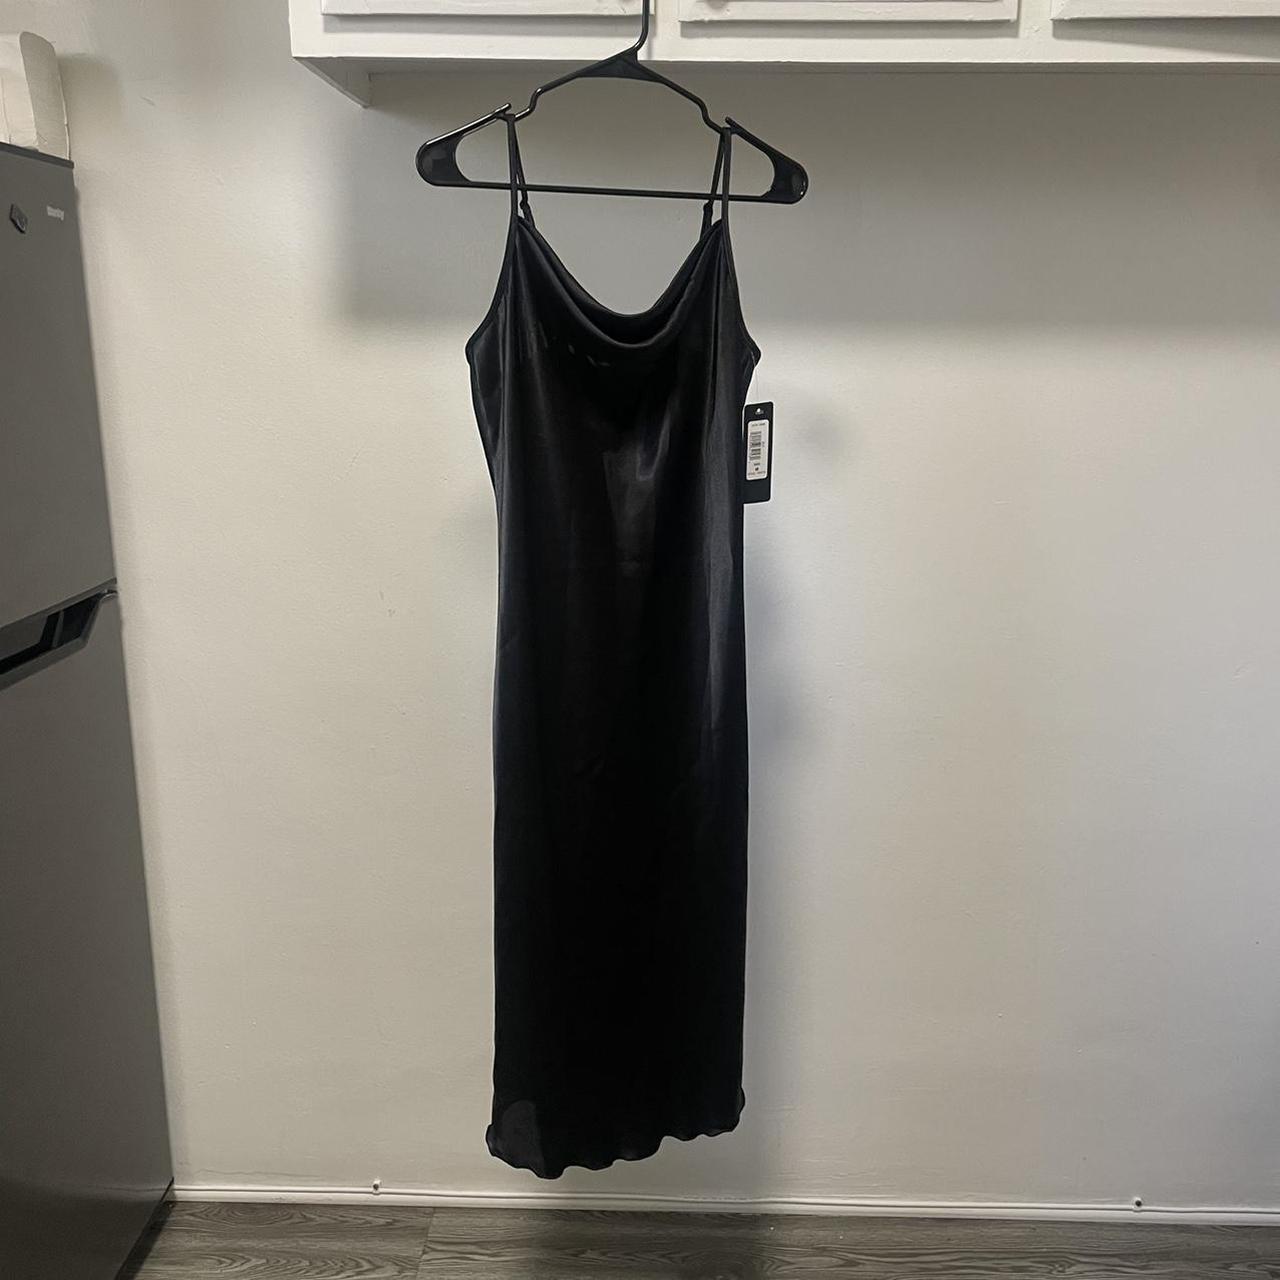 Product Image 1 - Bebe black satin dress. Spaghetti